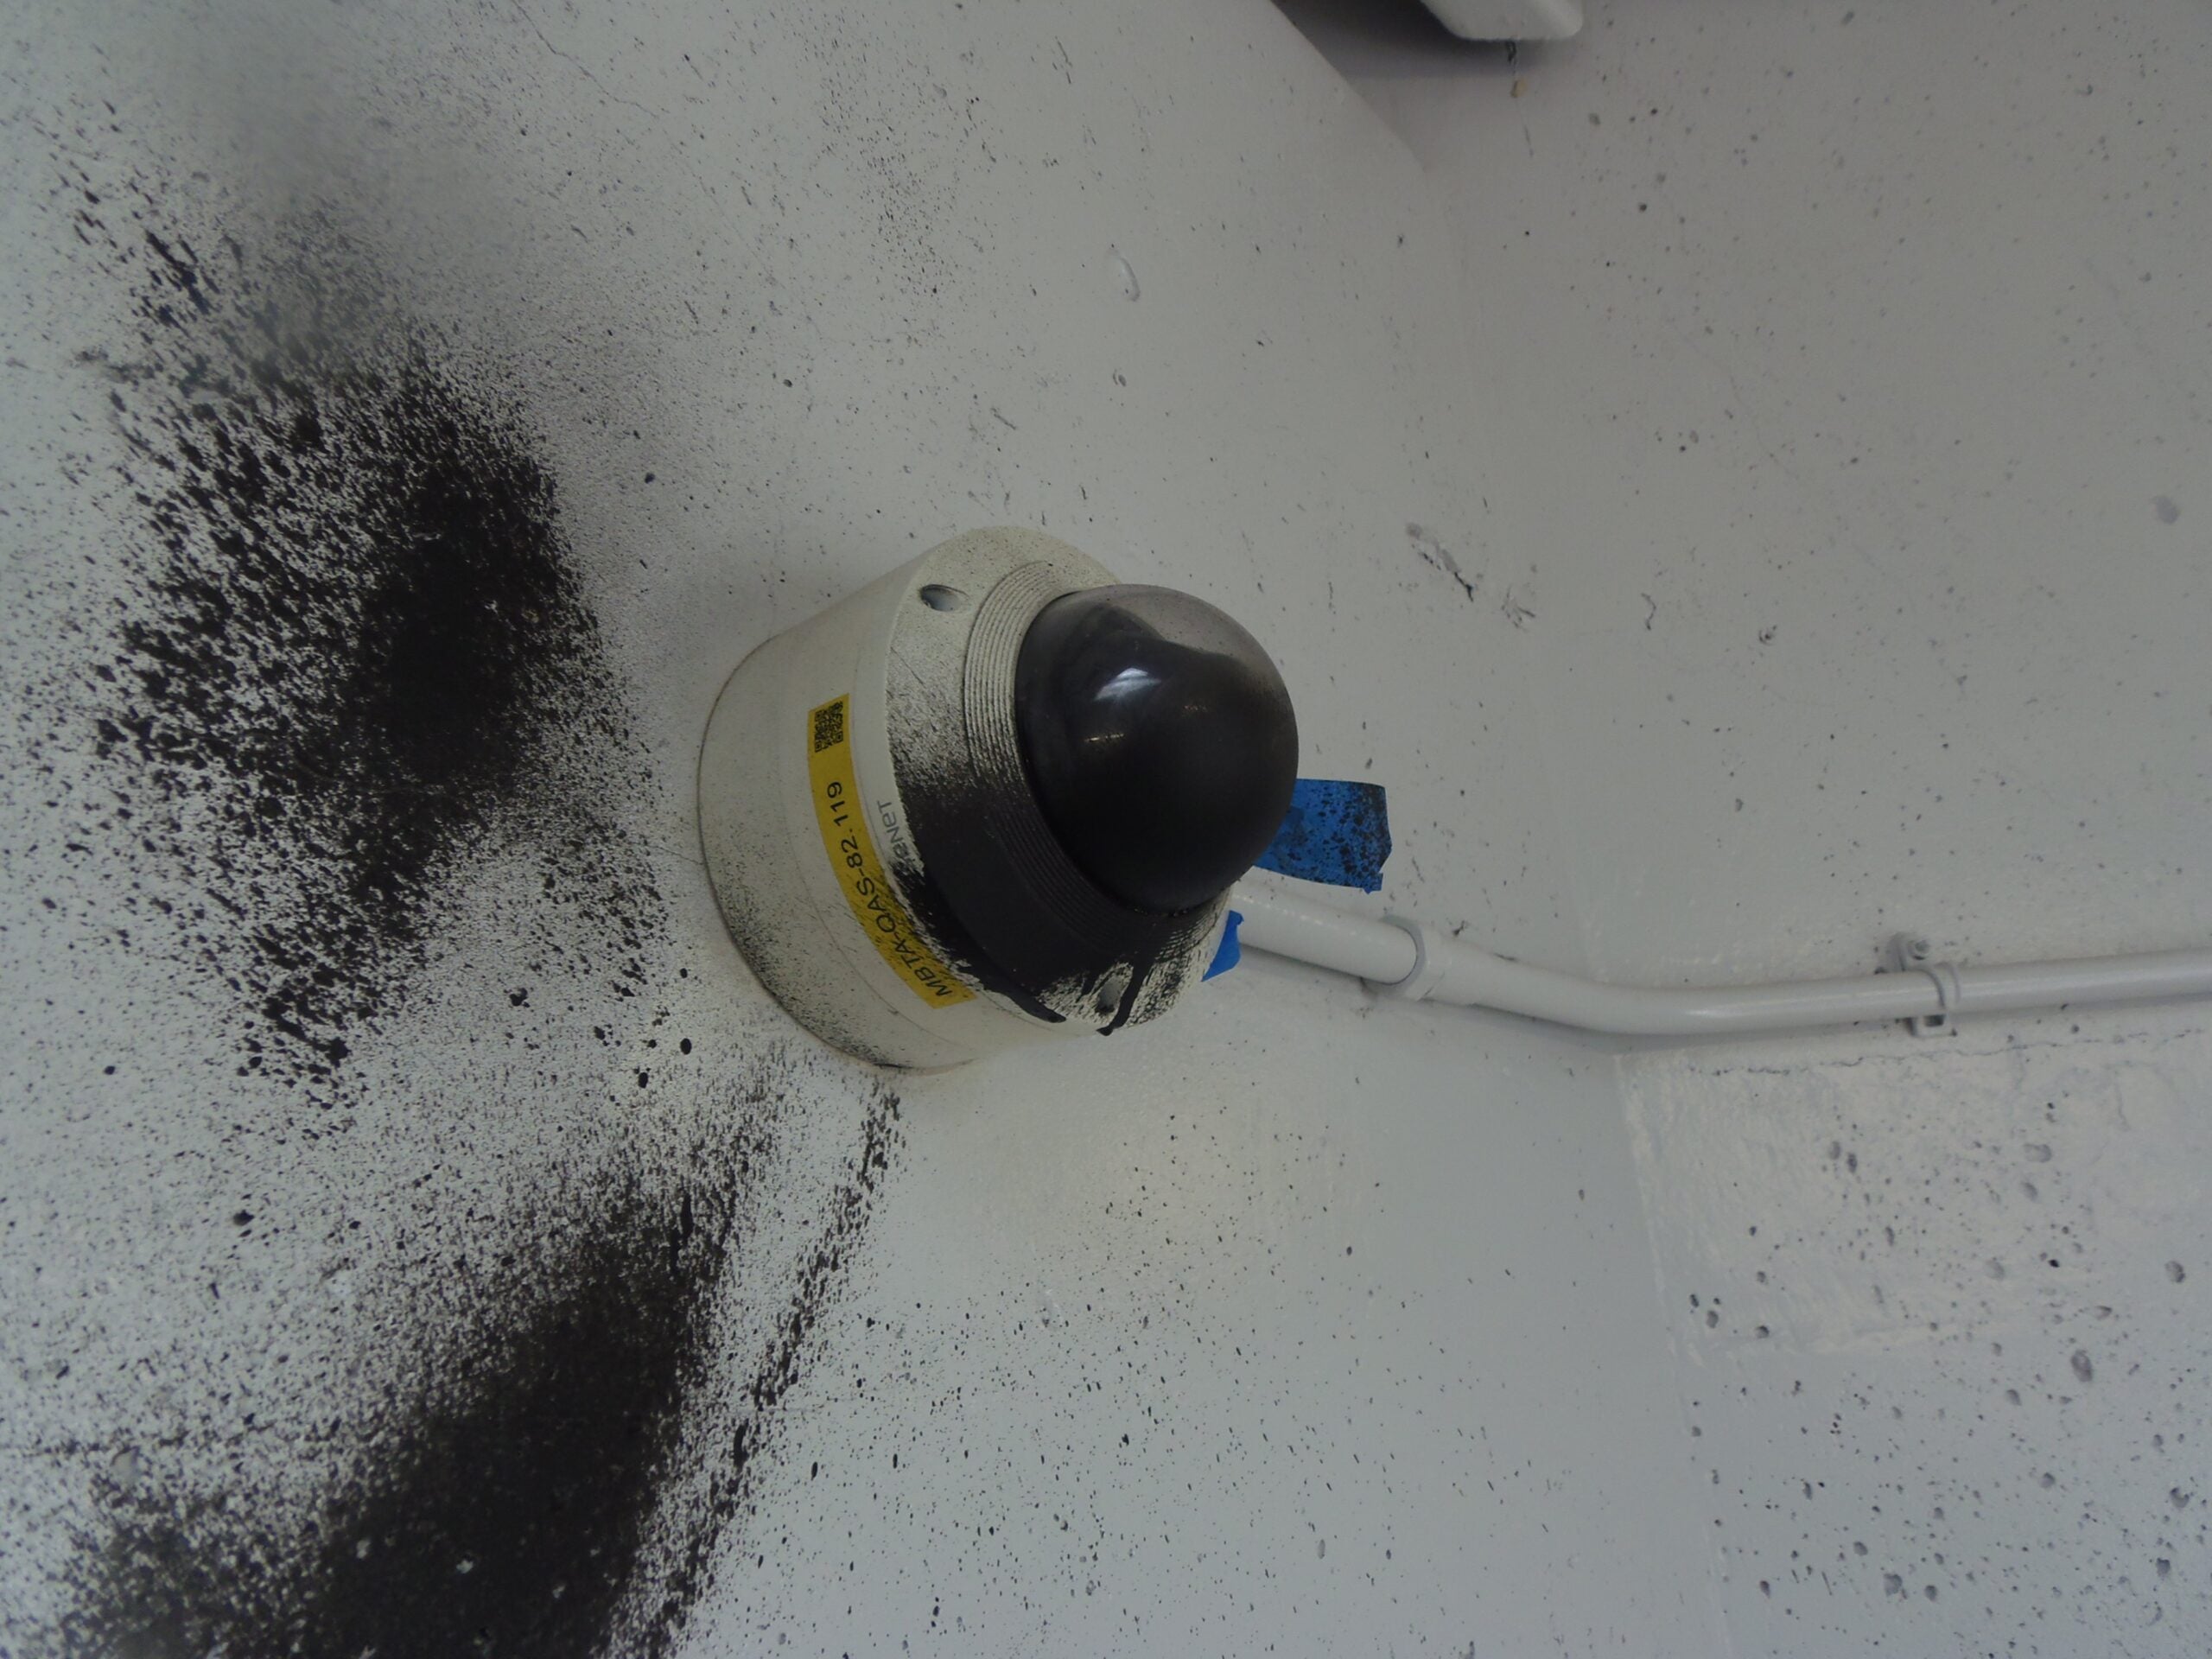 alt = an MBTA security camera vandalized with black spray paint